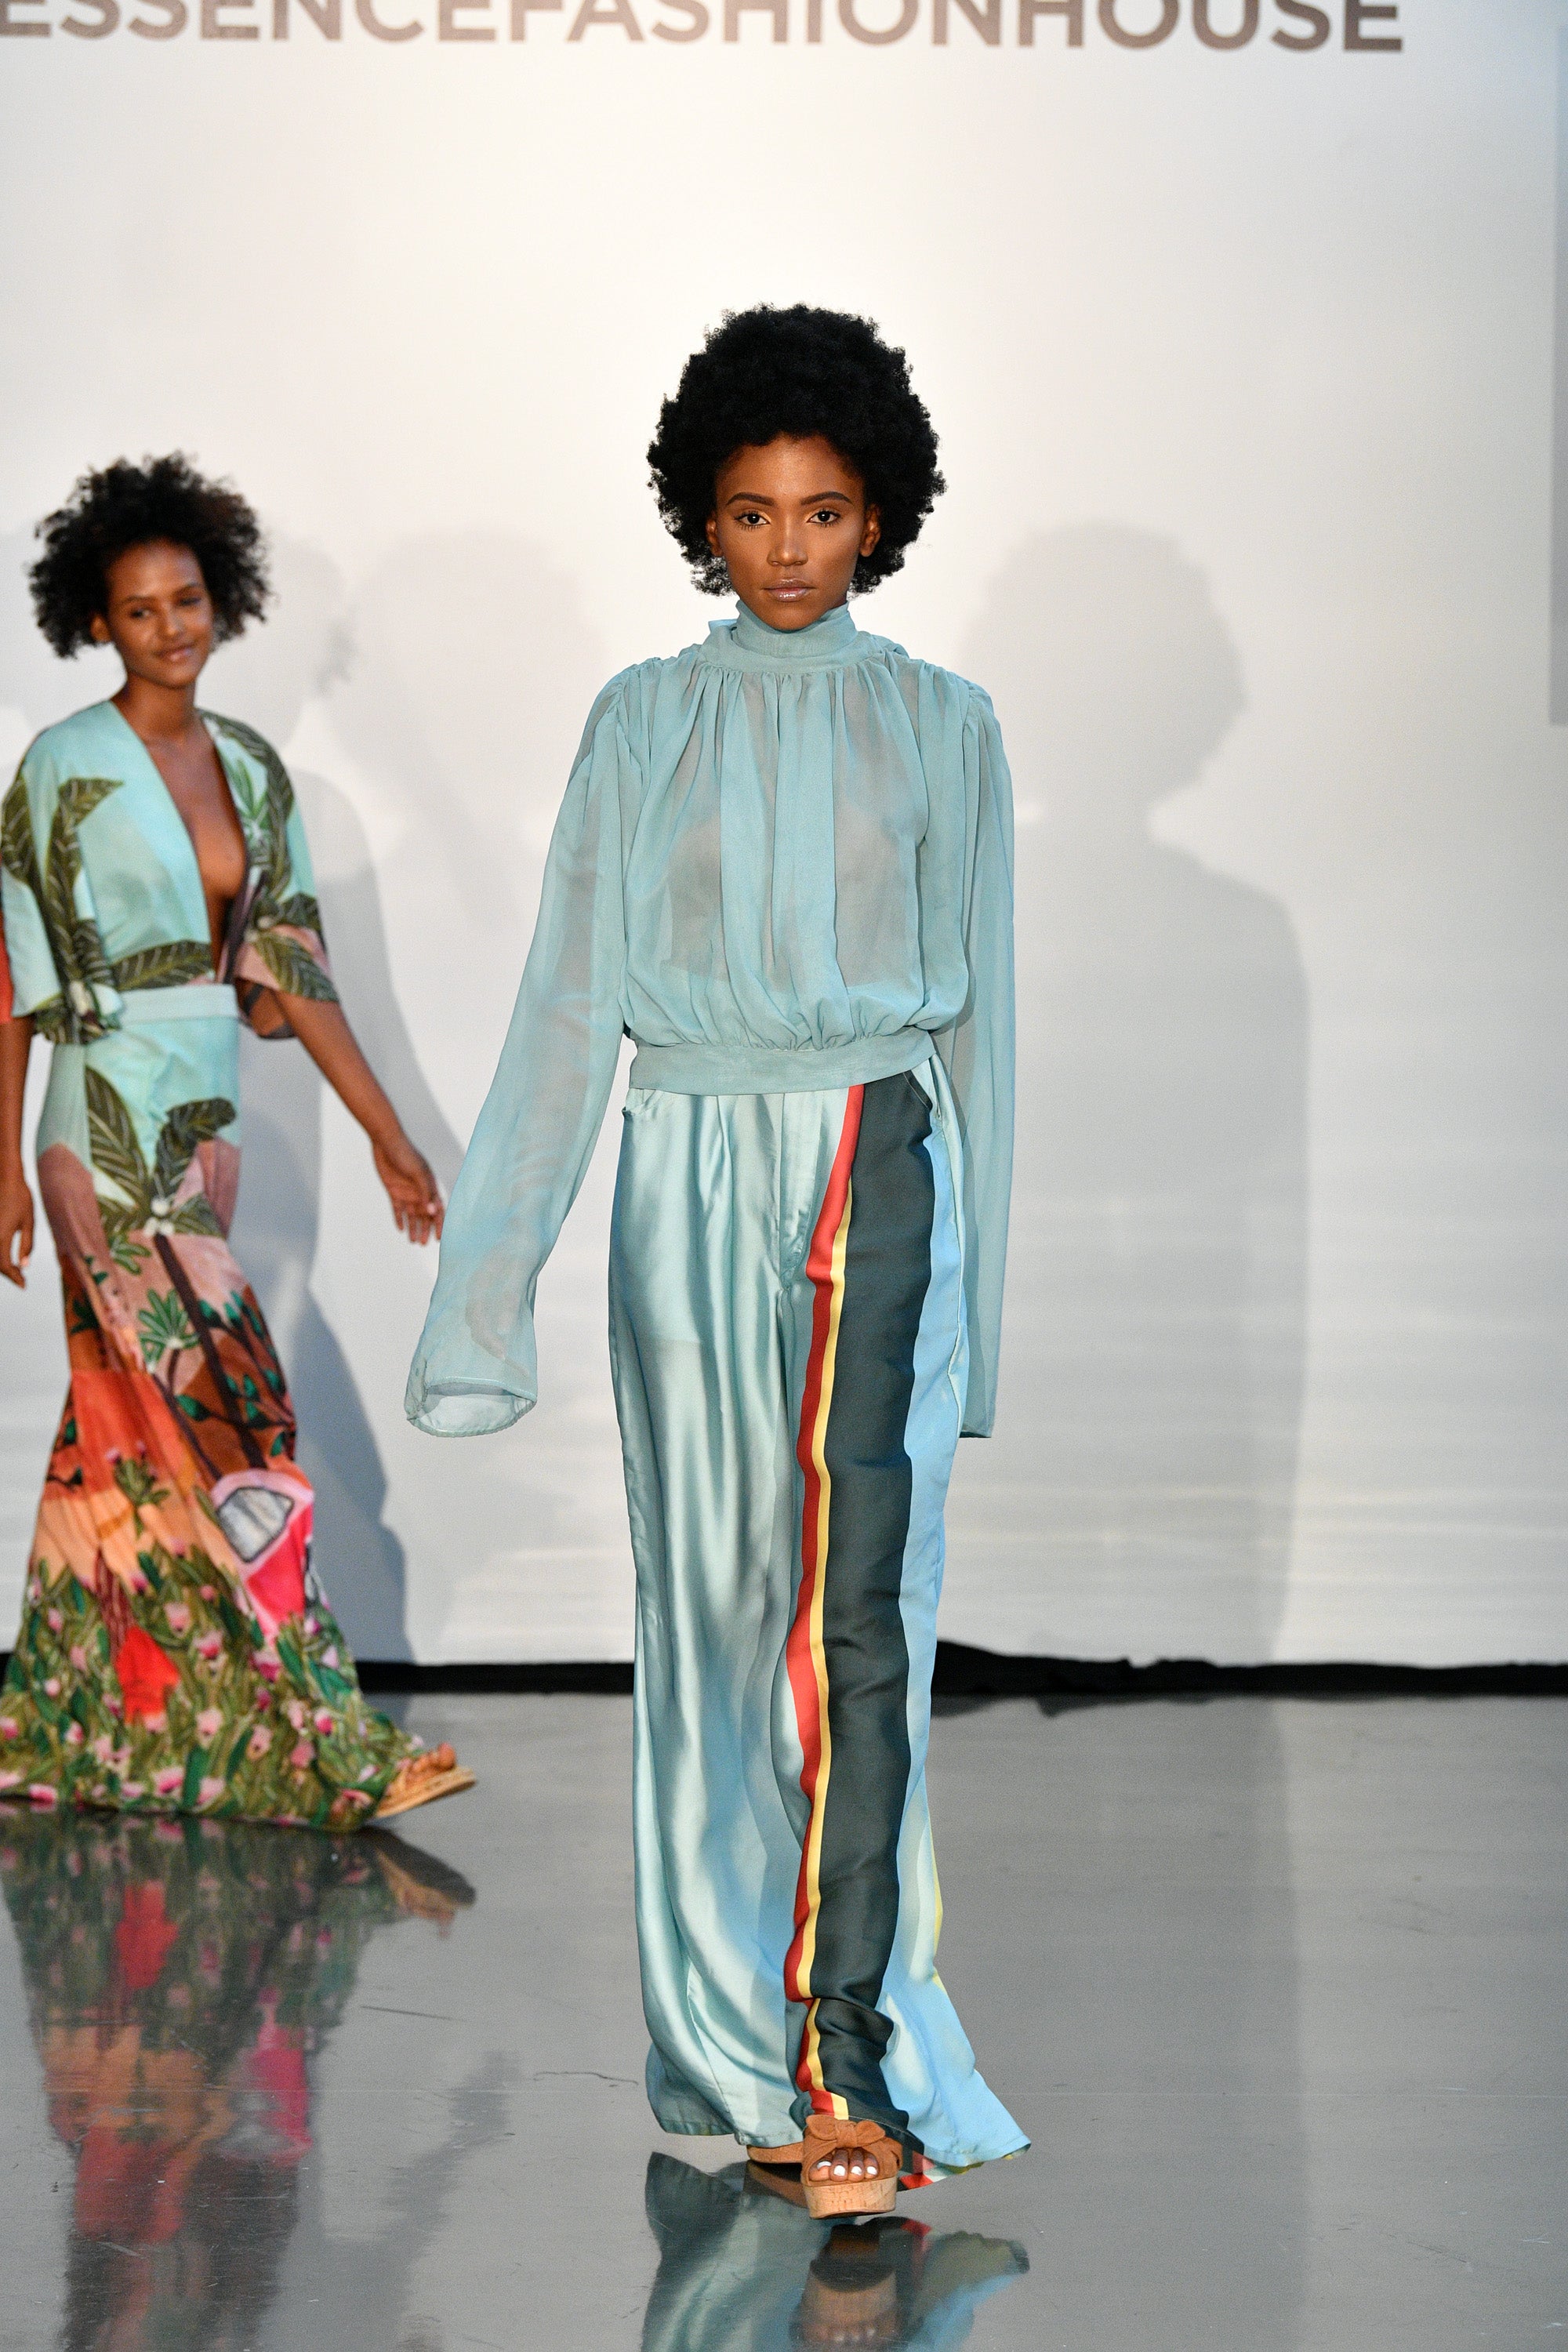 Essence Fashion House NYC: Fe Noel Is The ESSENCE BIBFA Designer Of The Year